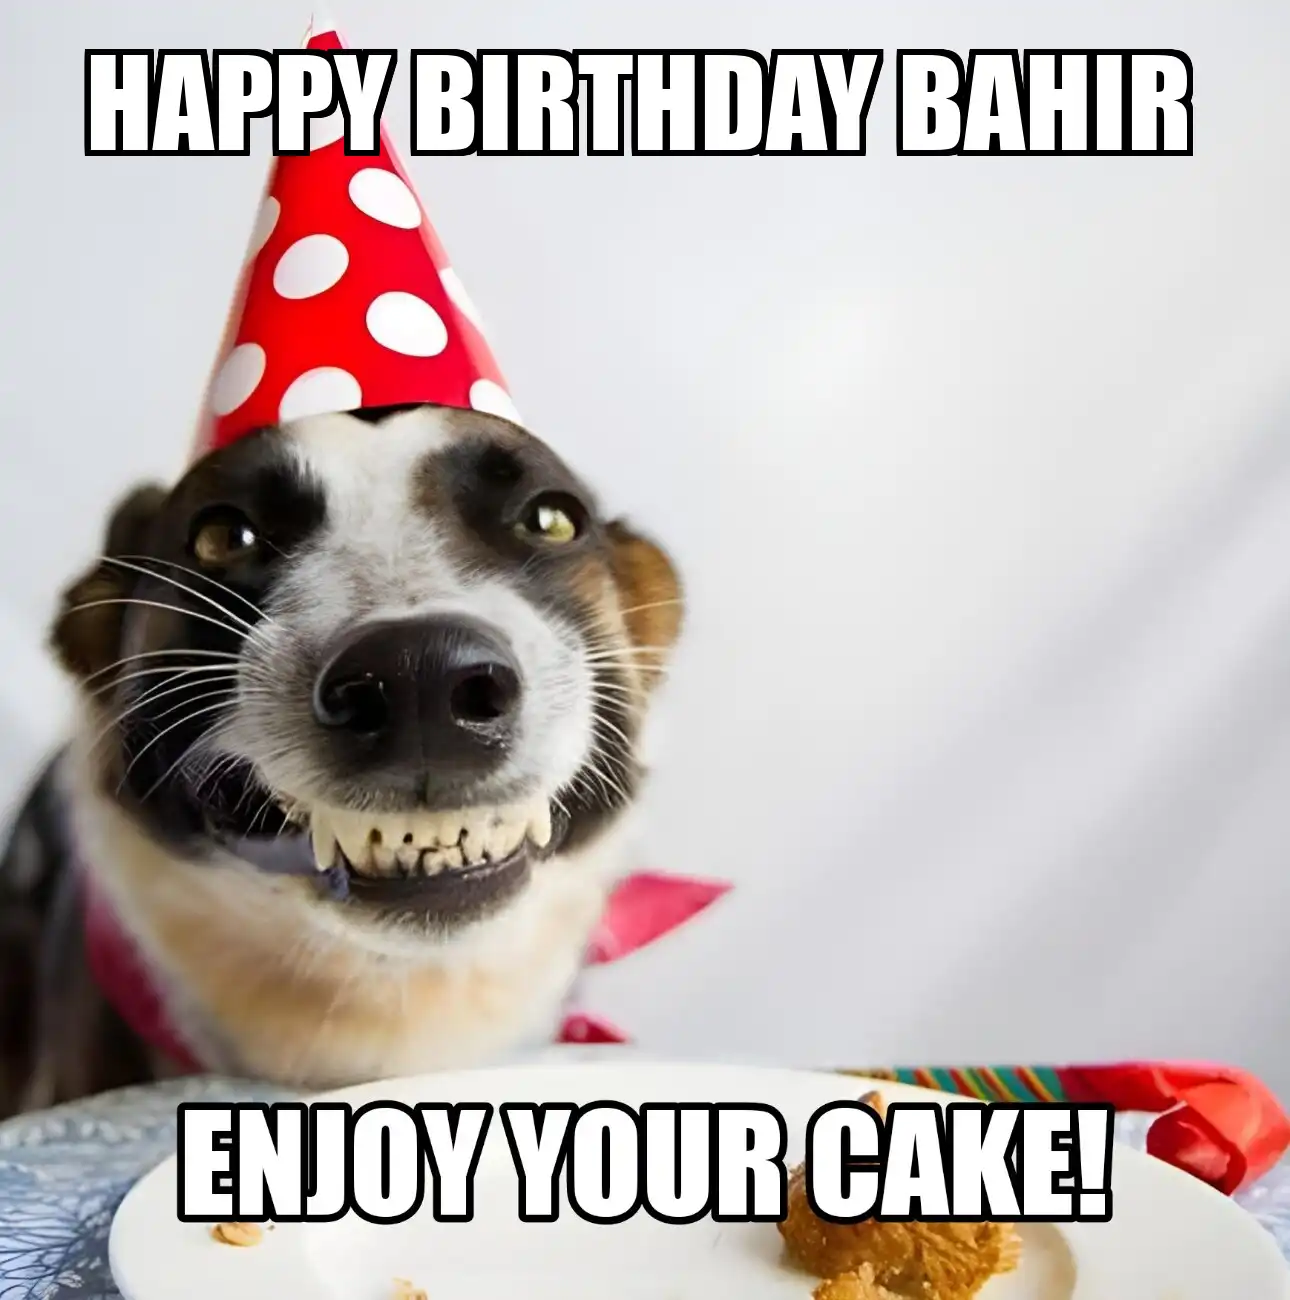 Happy Birthday Bahir Enjoy Your Cake Dog Meme